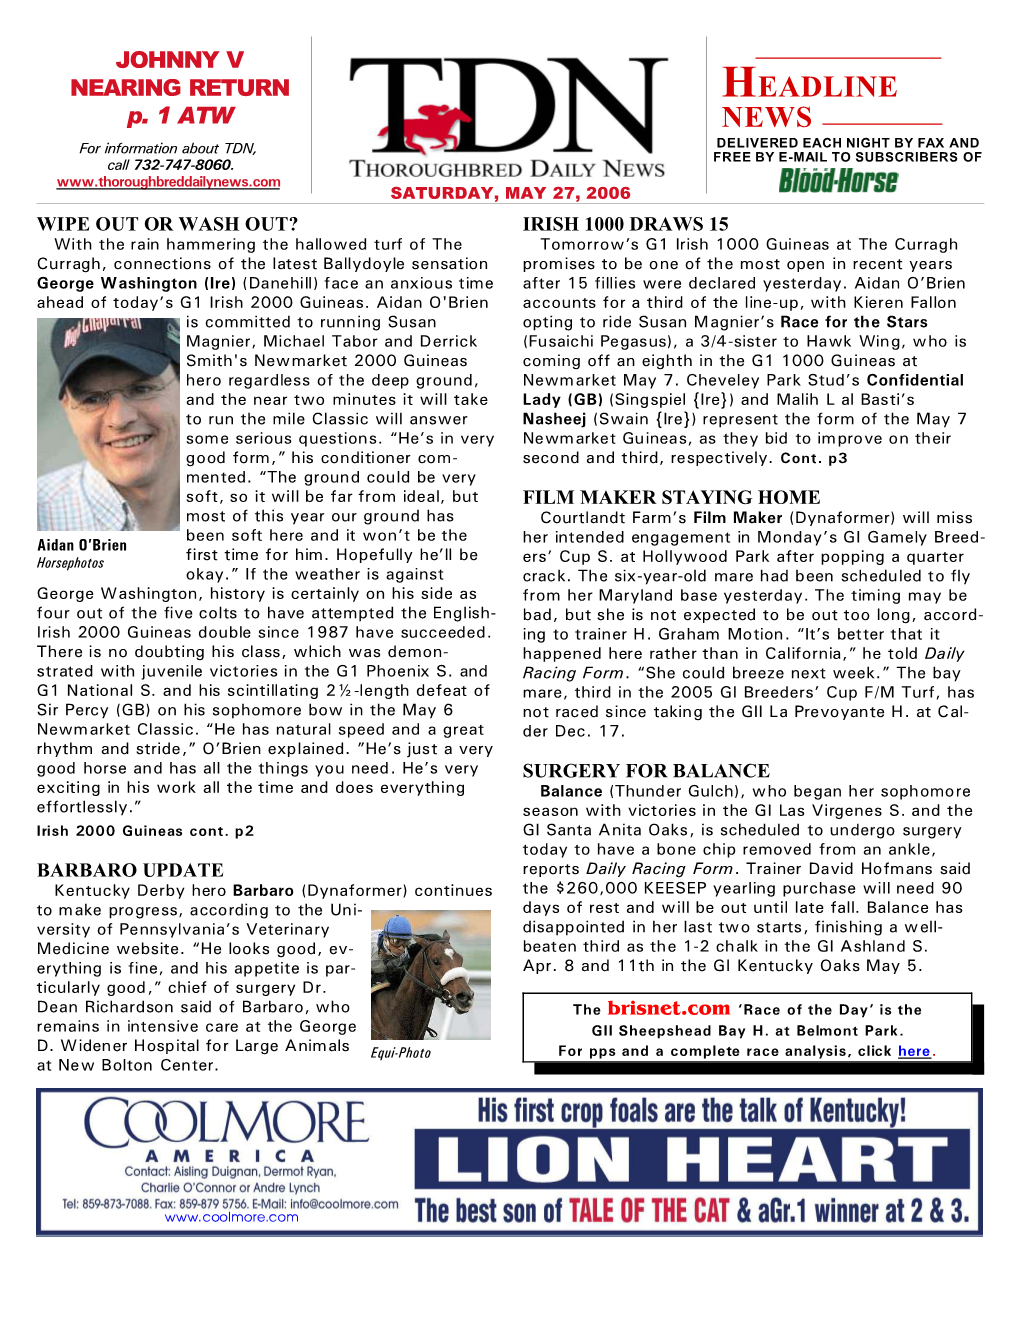 HEADLINE NEWS • 5/27/06 • PAGE 2 of 5